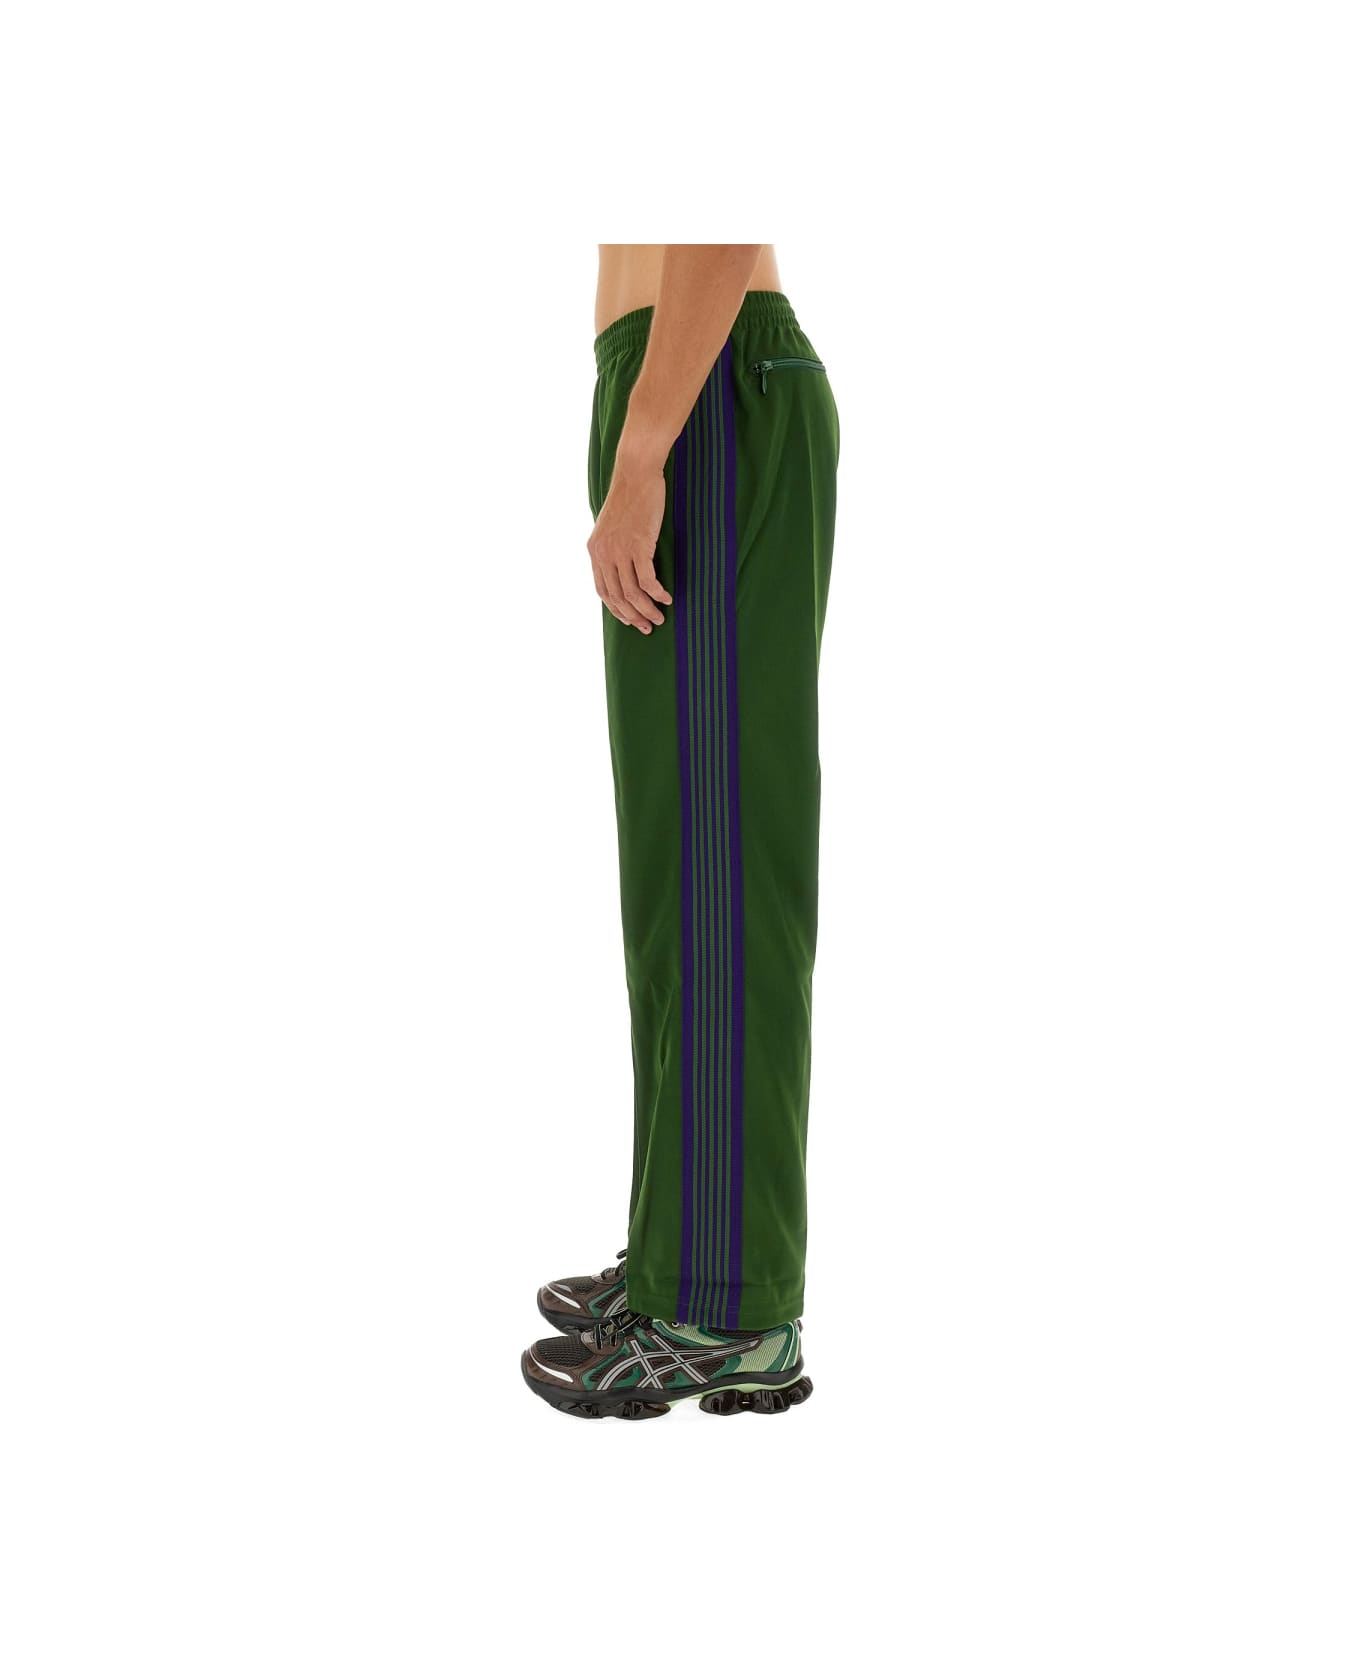 Needles Jogging Pants - Ivy green